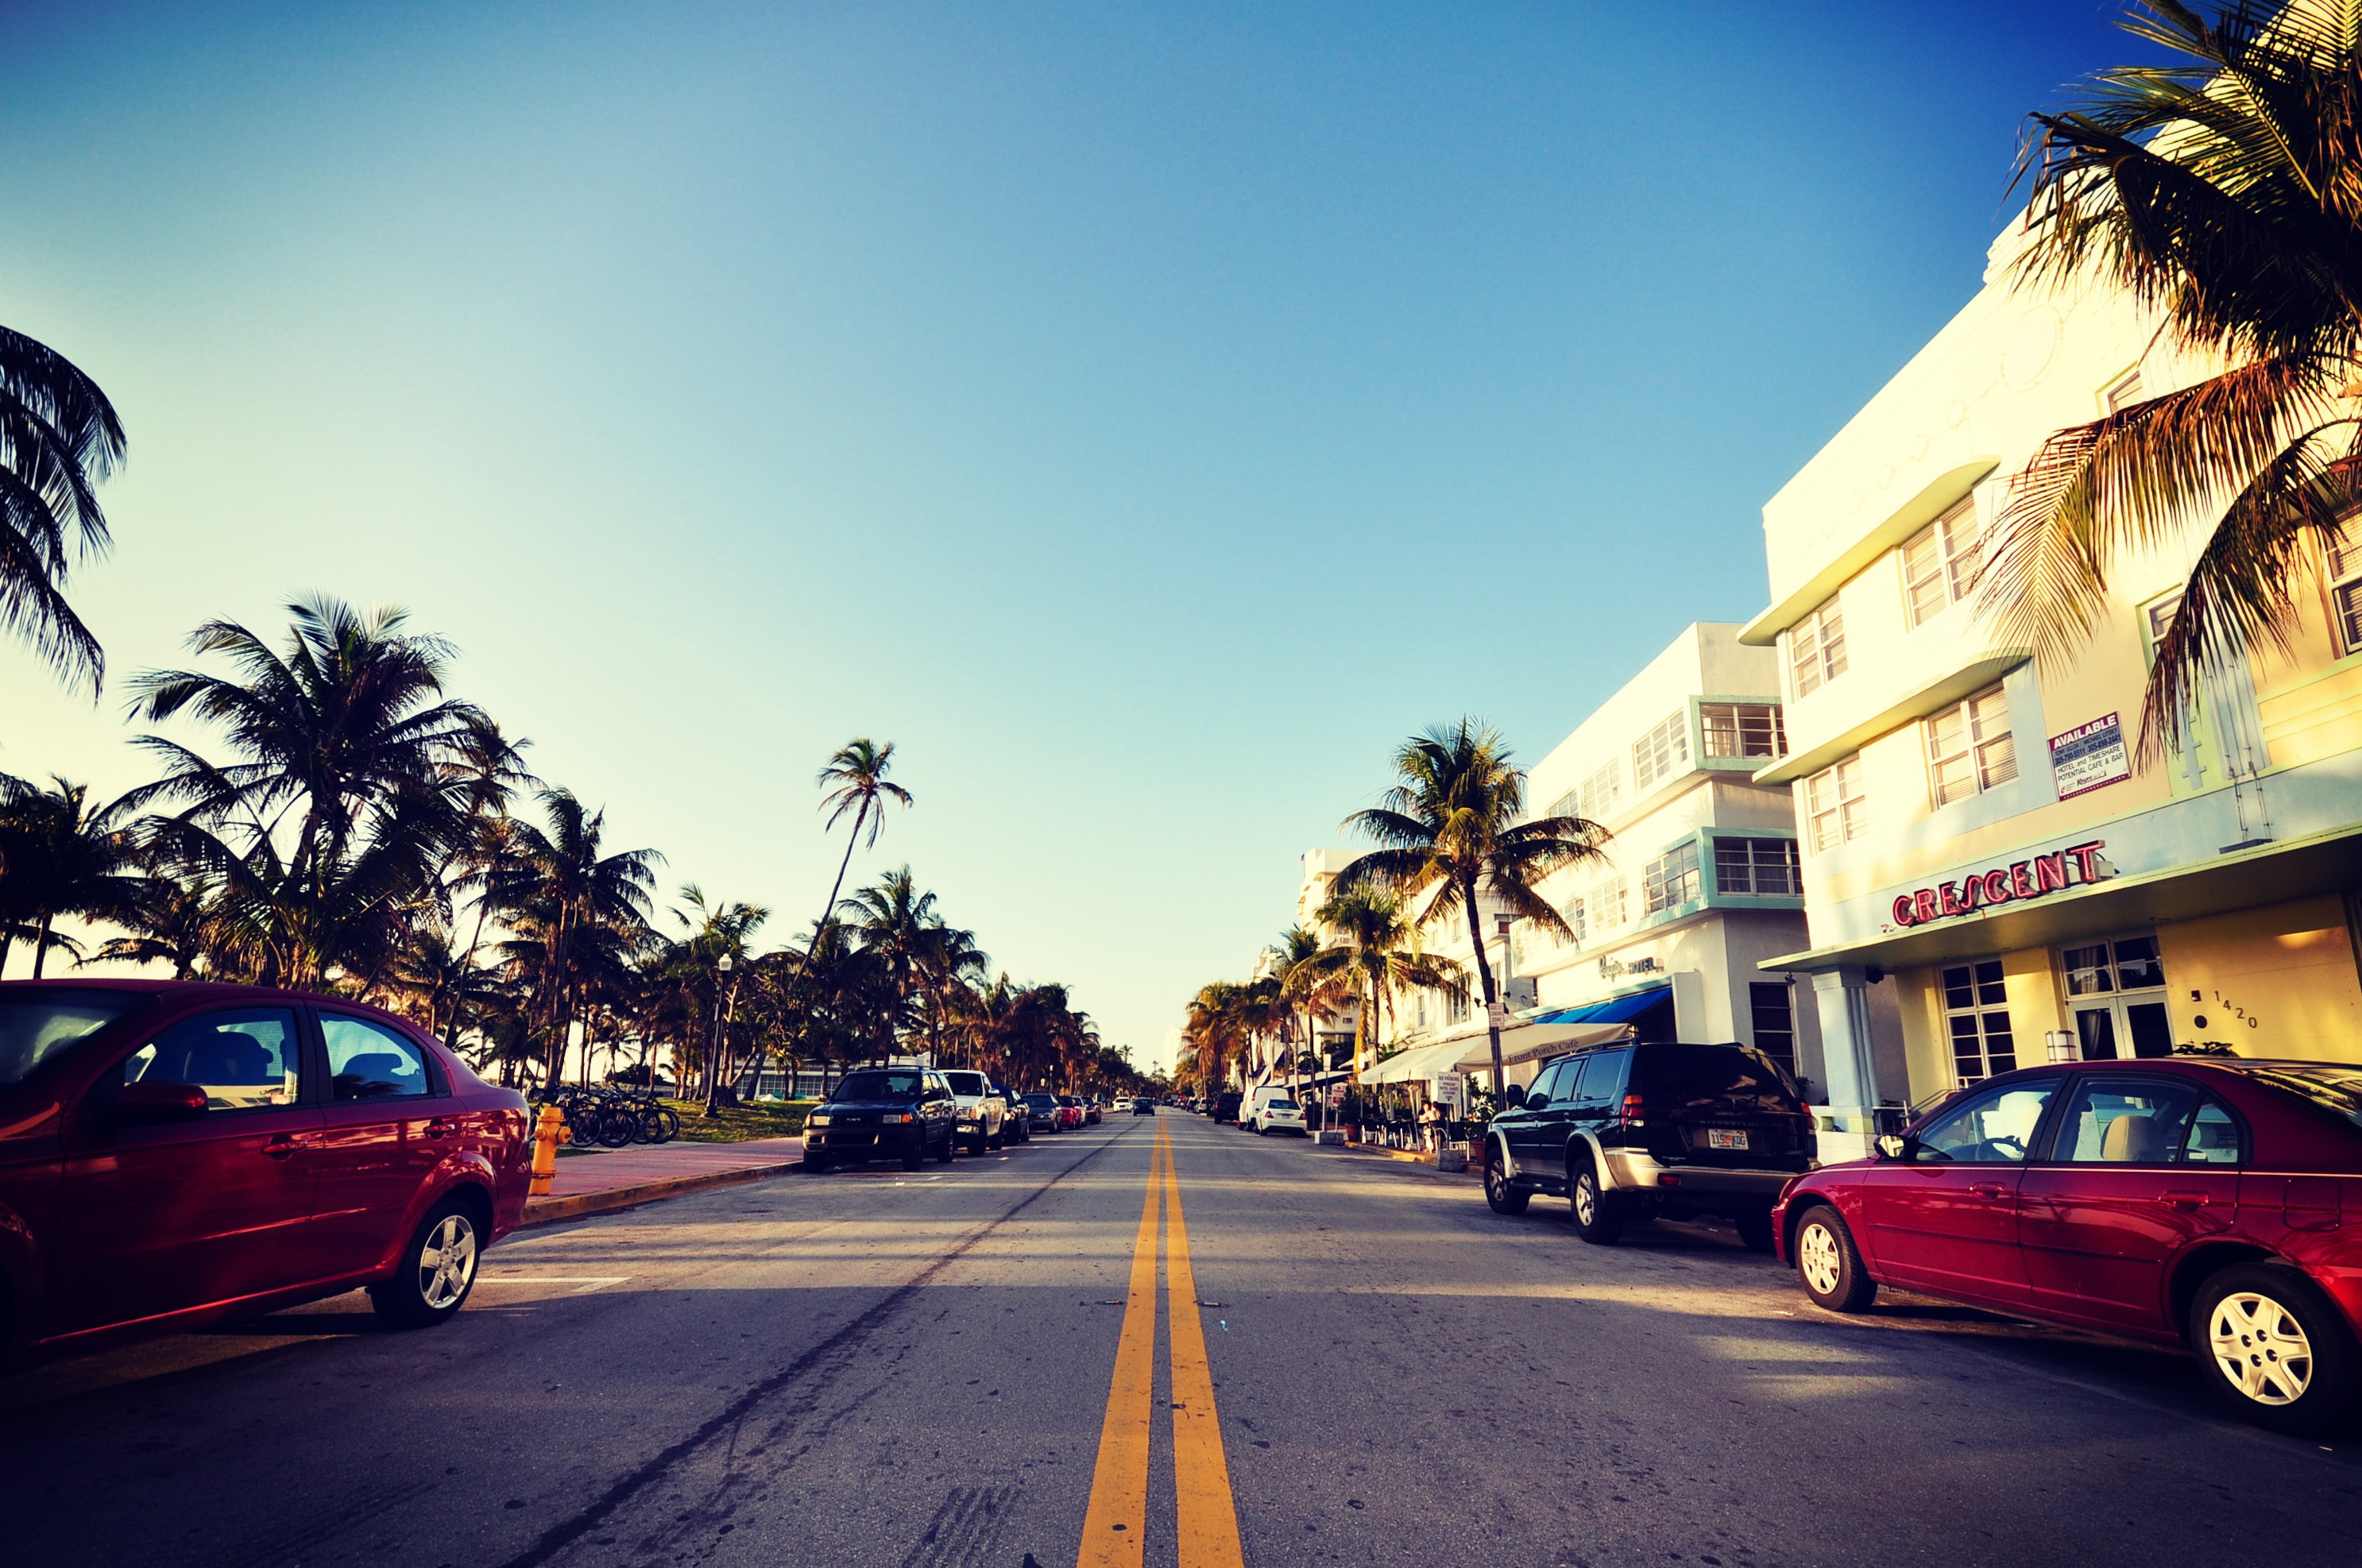 Florida, Miami city, South Beach, gray pavement